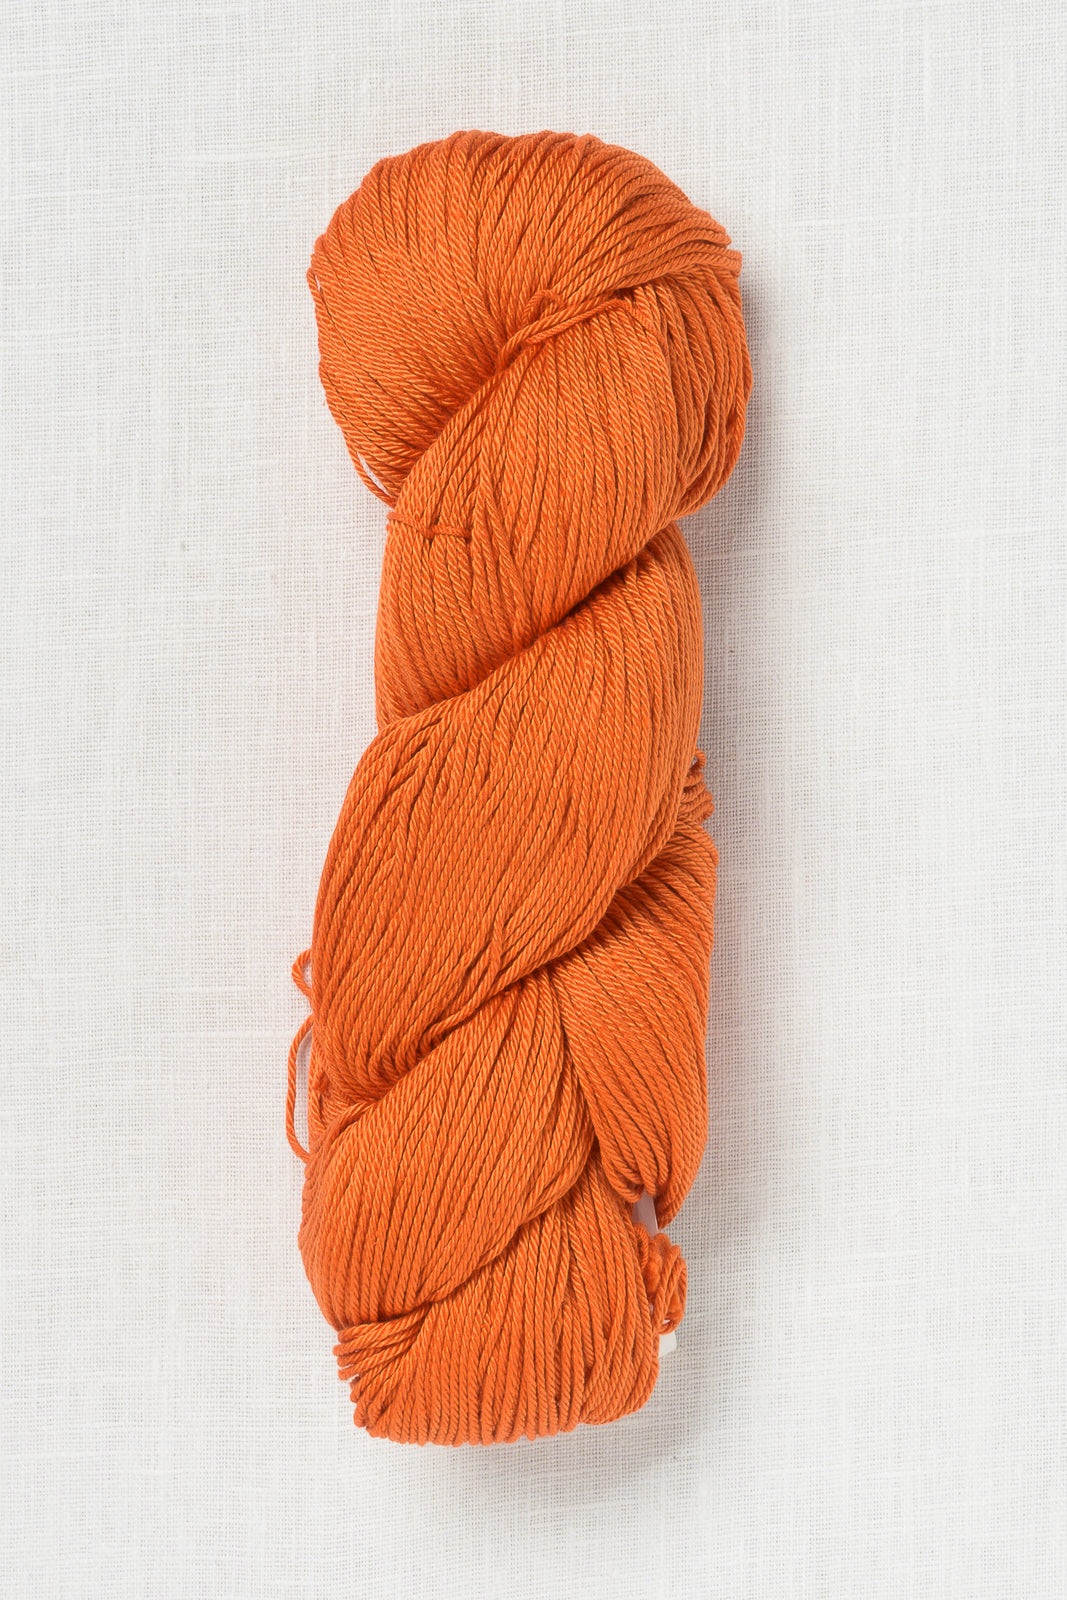 Katia Maravilla Fancy Yarn Fiber Art Luxury Yarn Rust Burnt Orange ~ 4  Available